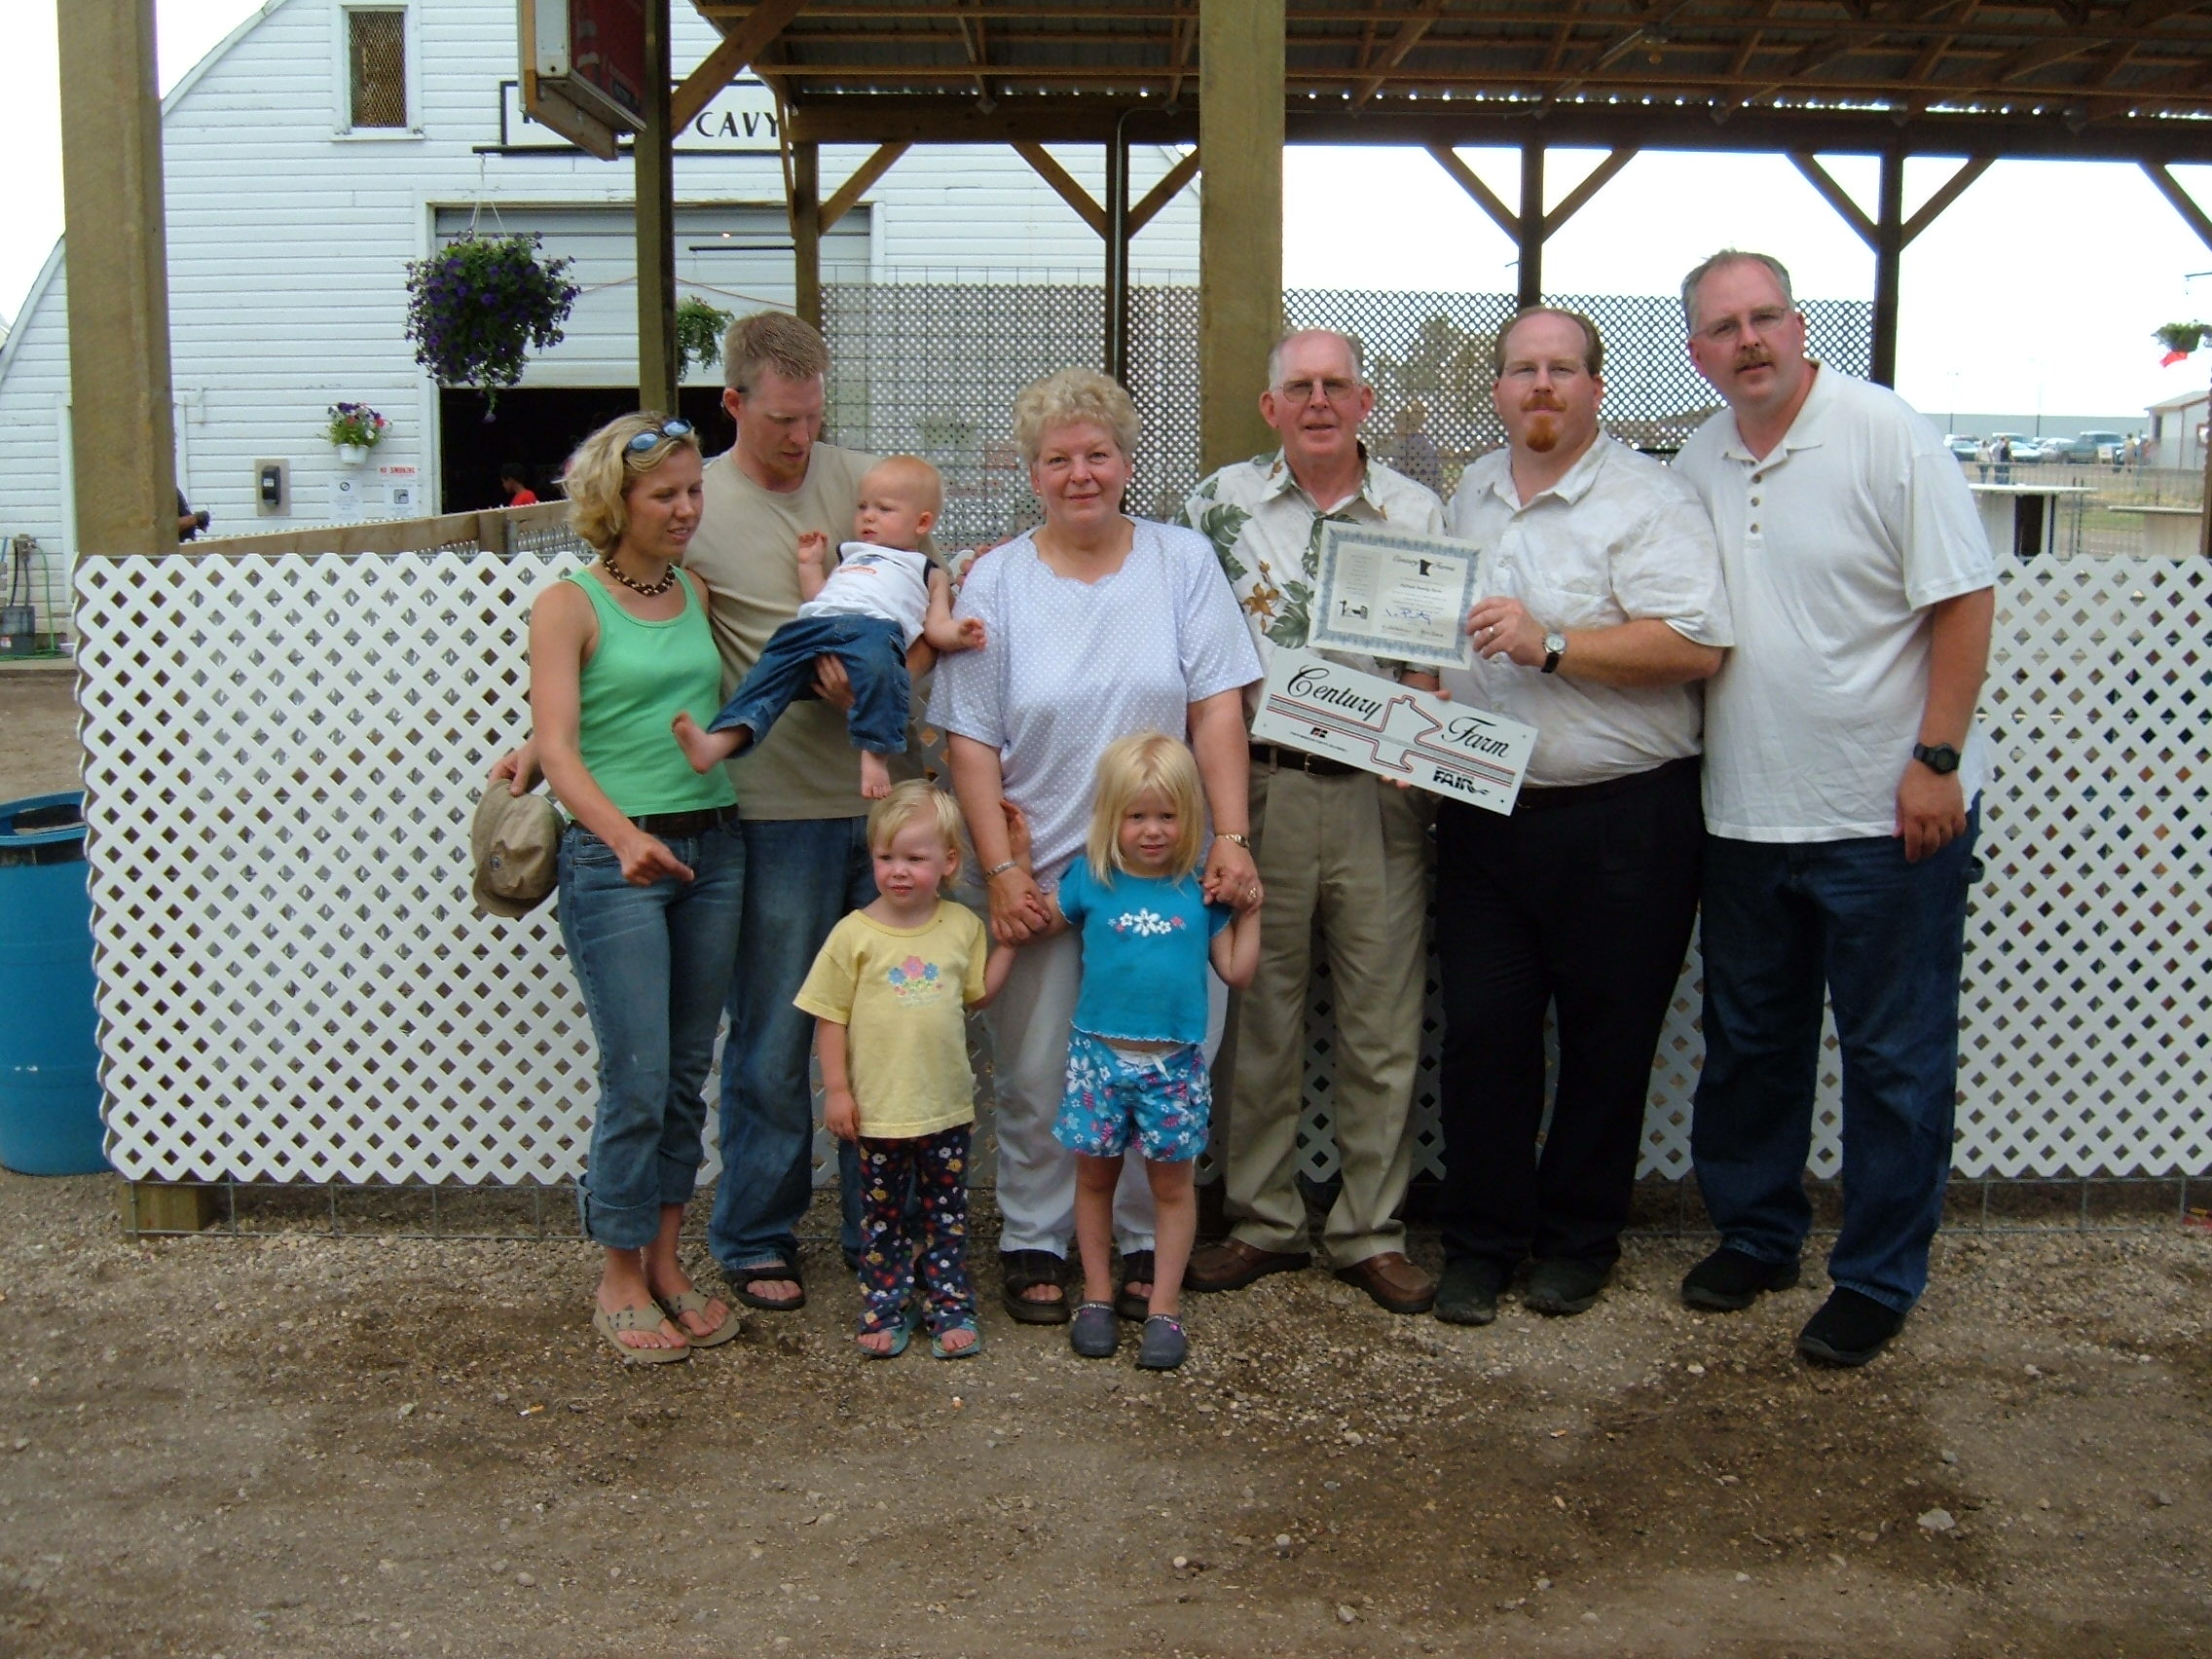 Century Farm award given at fair